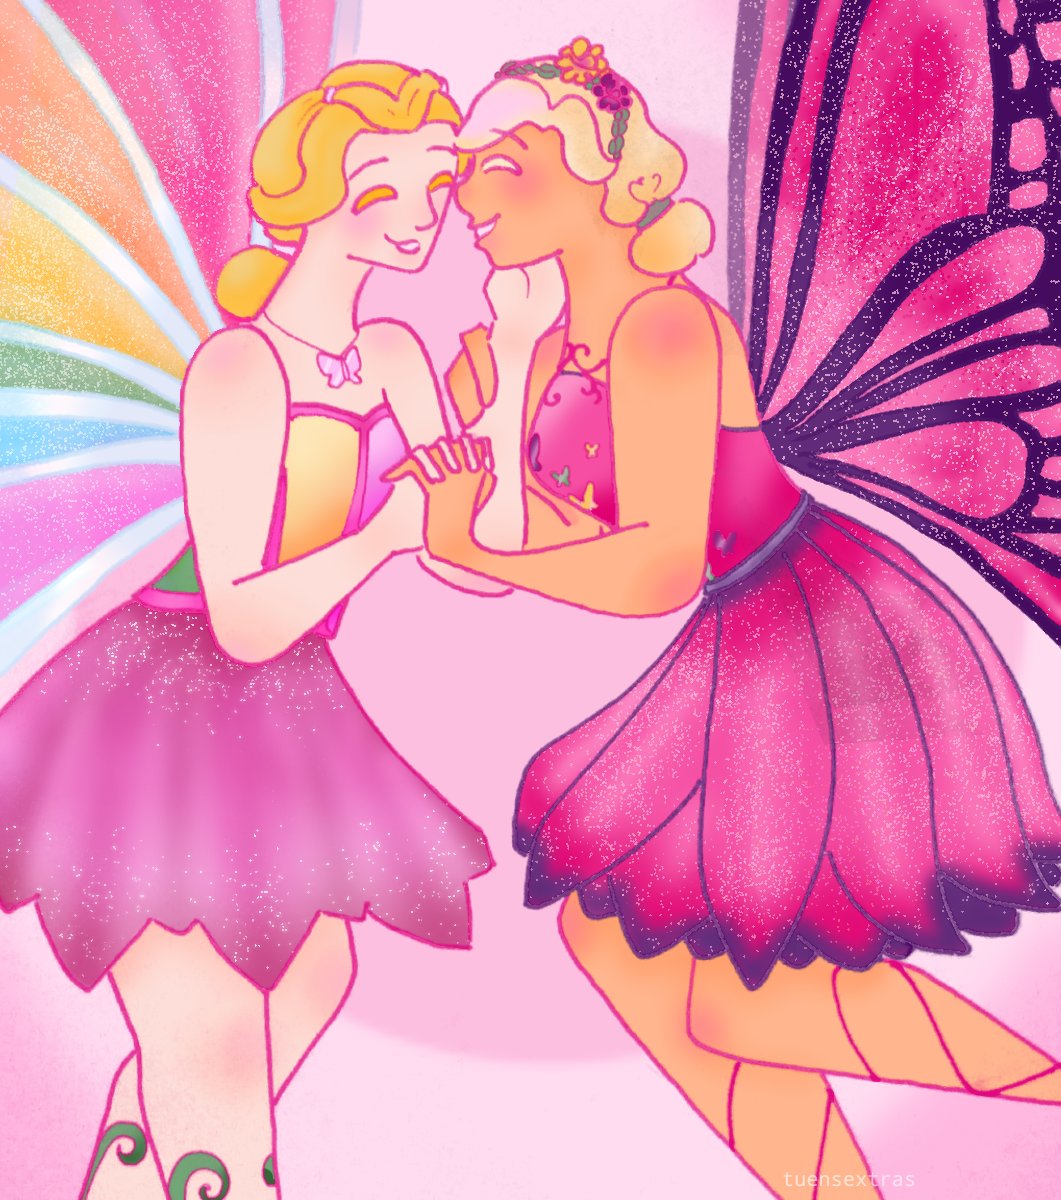 X 上的 tuen 🩷 is working on fanfics !!：「✨ gay fairies ✨ #artph #barbie # fairytopia #mariposa #elina https://t.co/BgdqCzAgnN」 / X